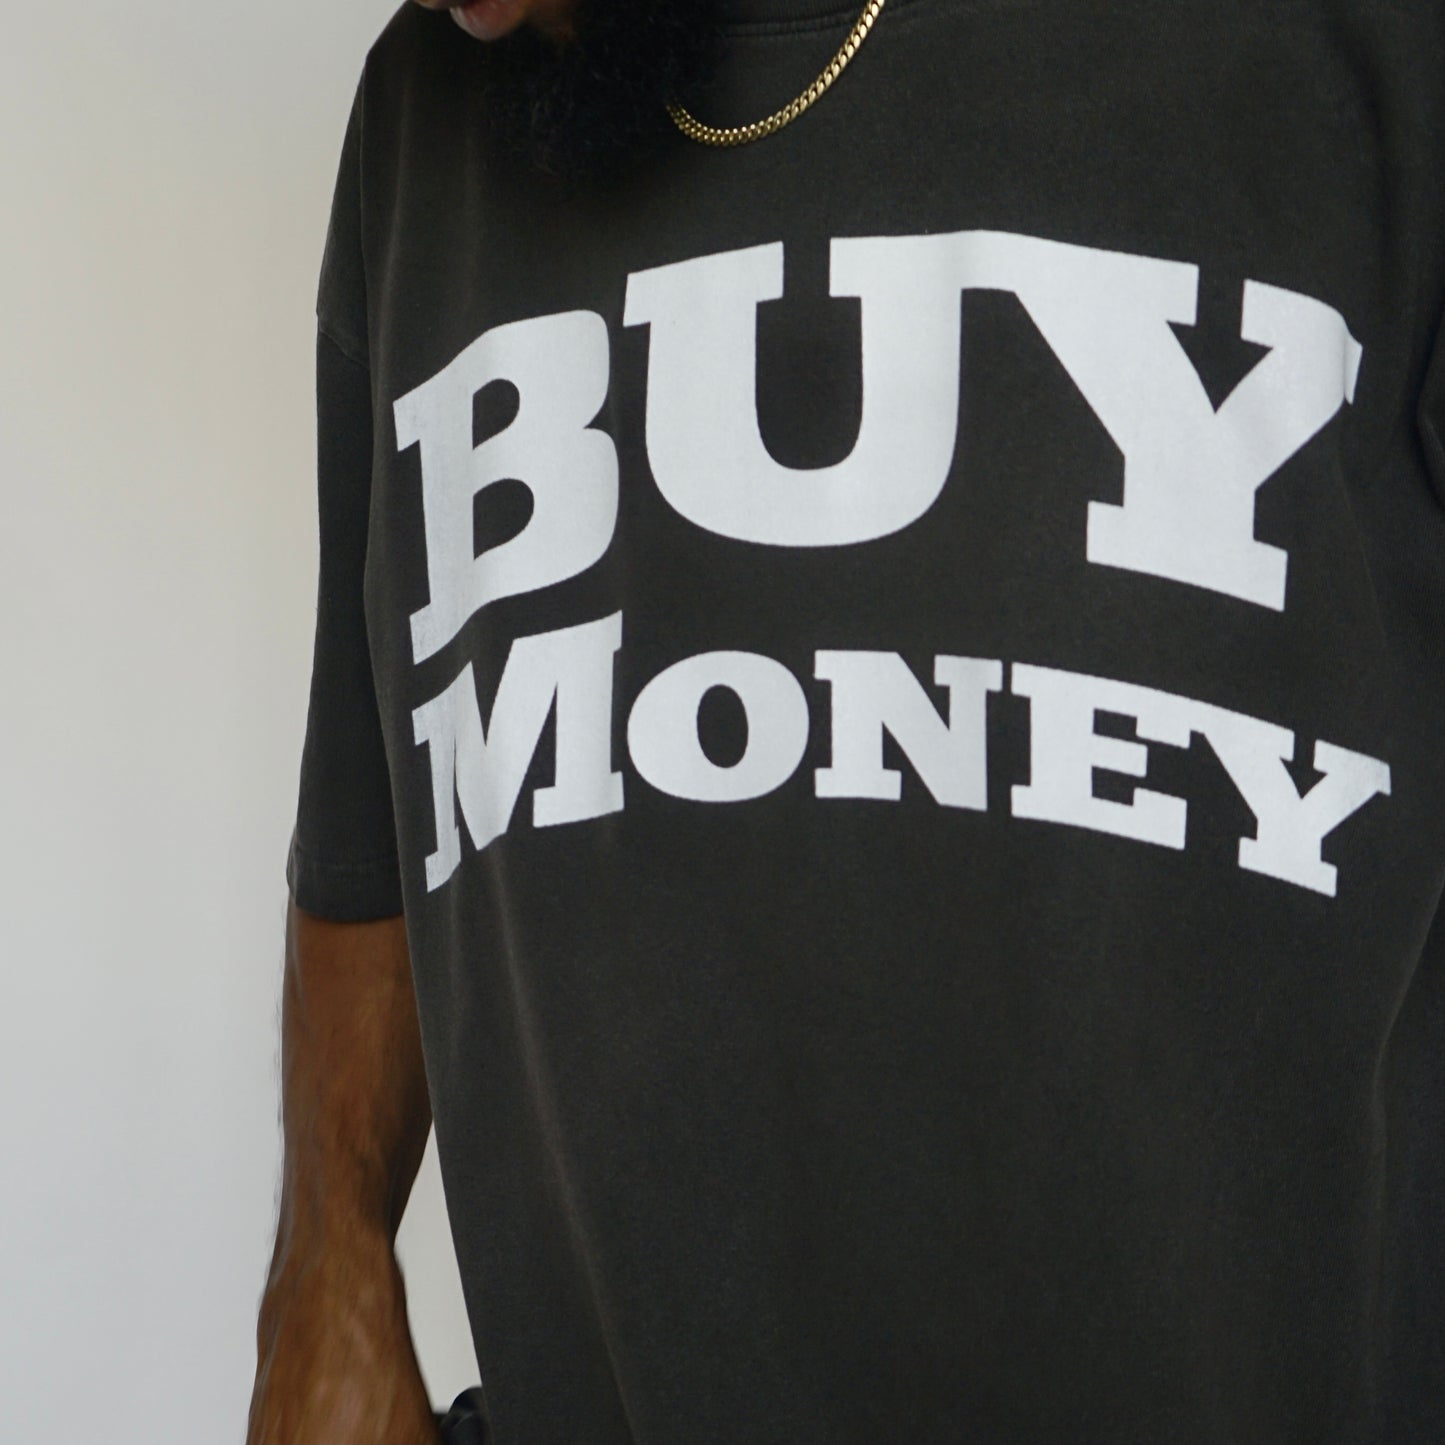 Buy Money "5-Habits" T Shirt